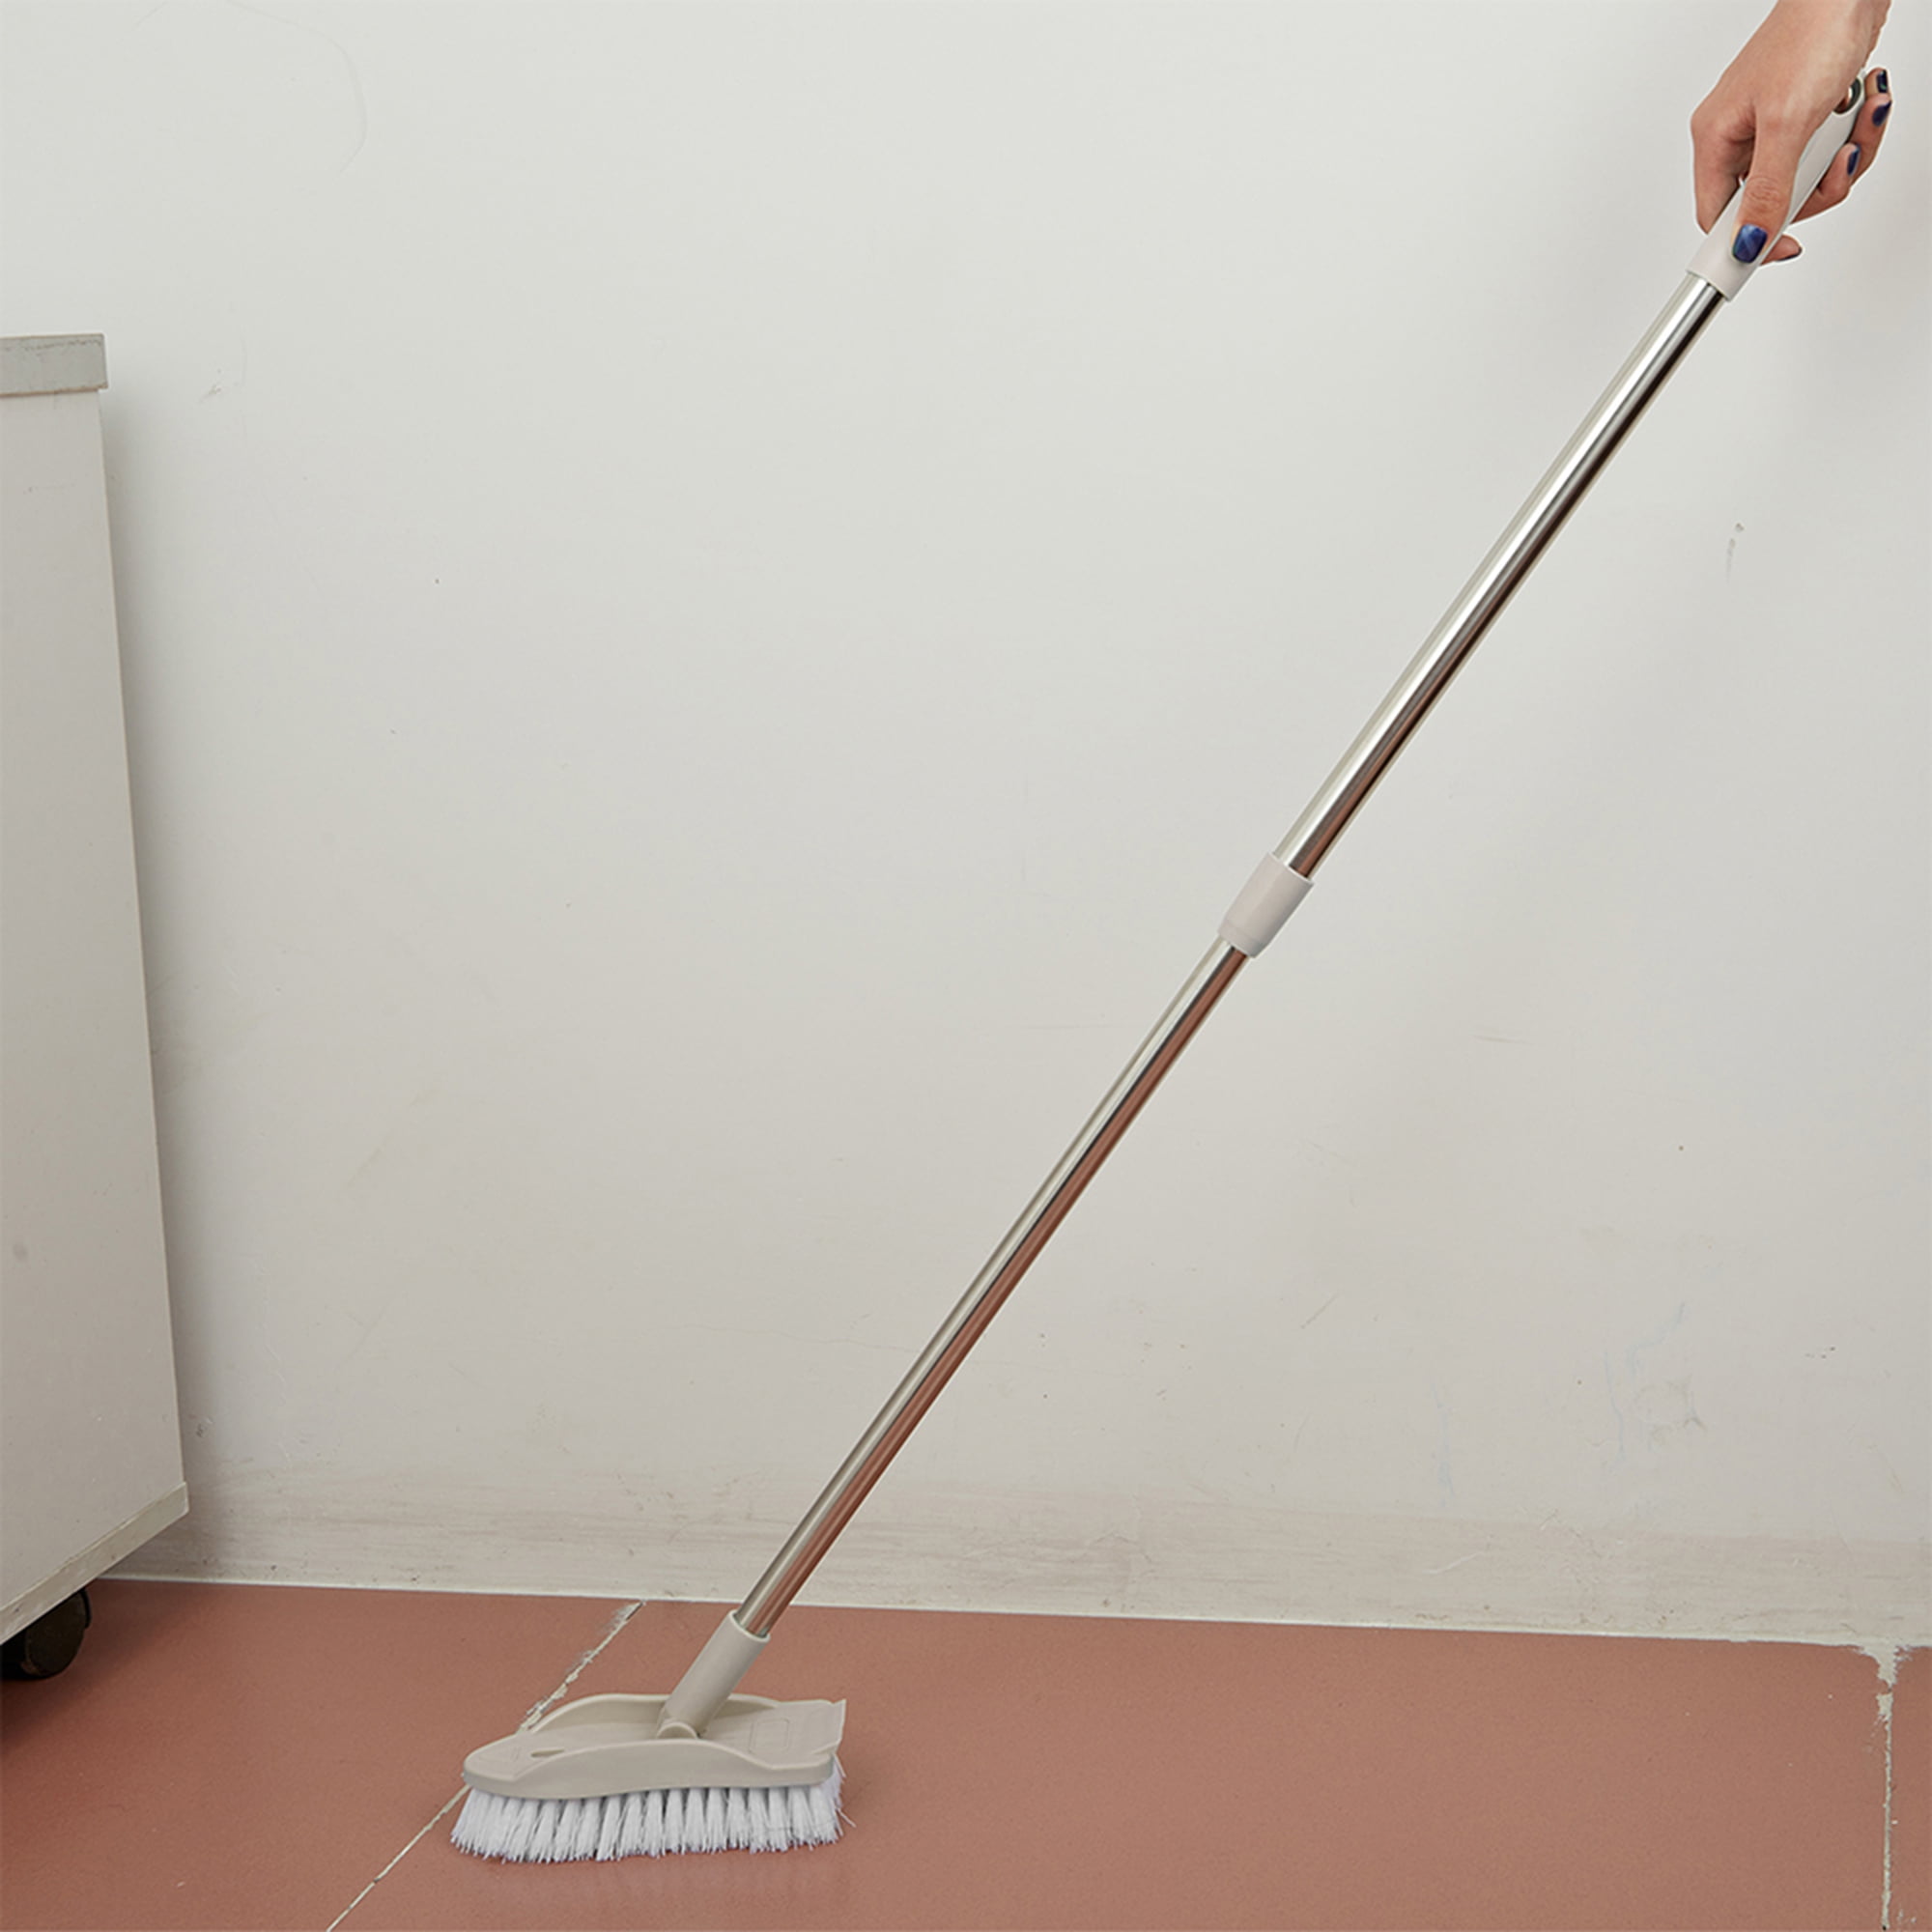 HENGLOBE Premium Rotating Bathroom Kitchen Crevice Cleaning Brush